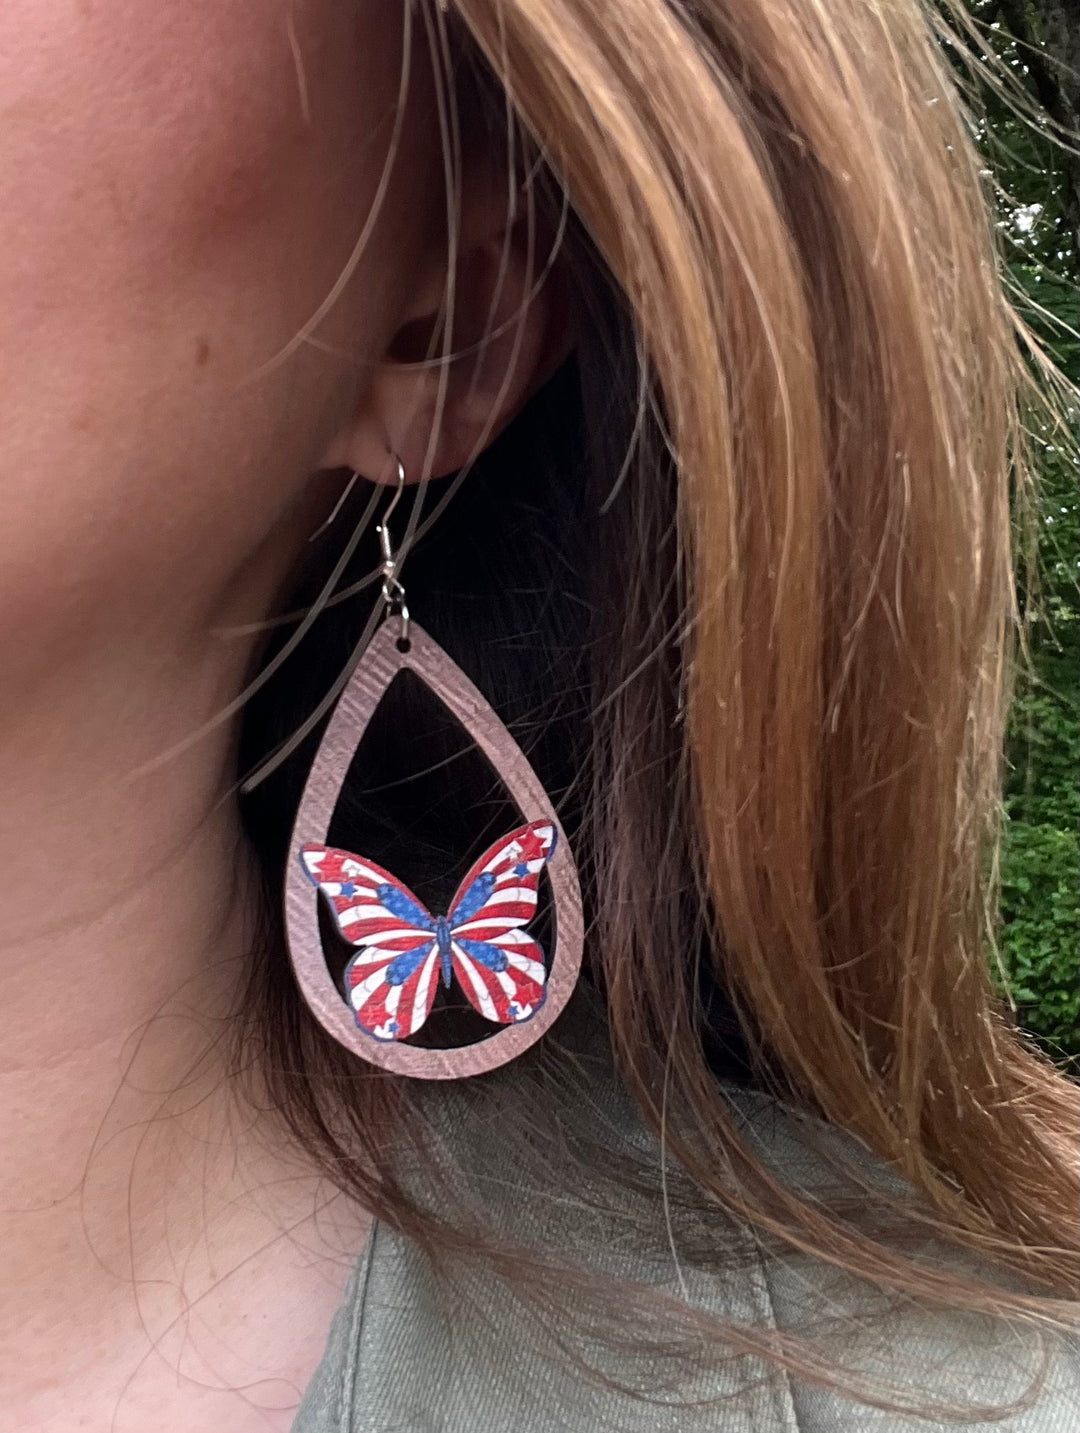 Patriotic American Flag Butterfly Teardrop Wood Dangle Earrings